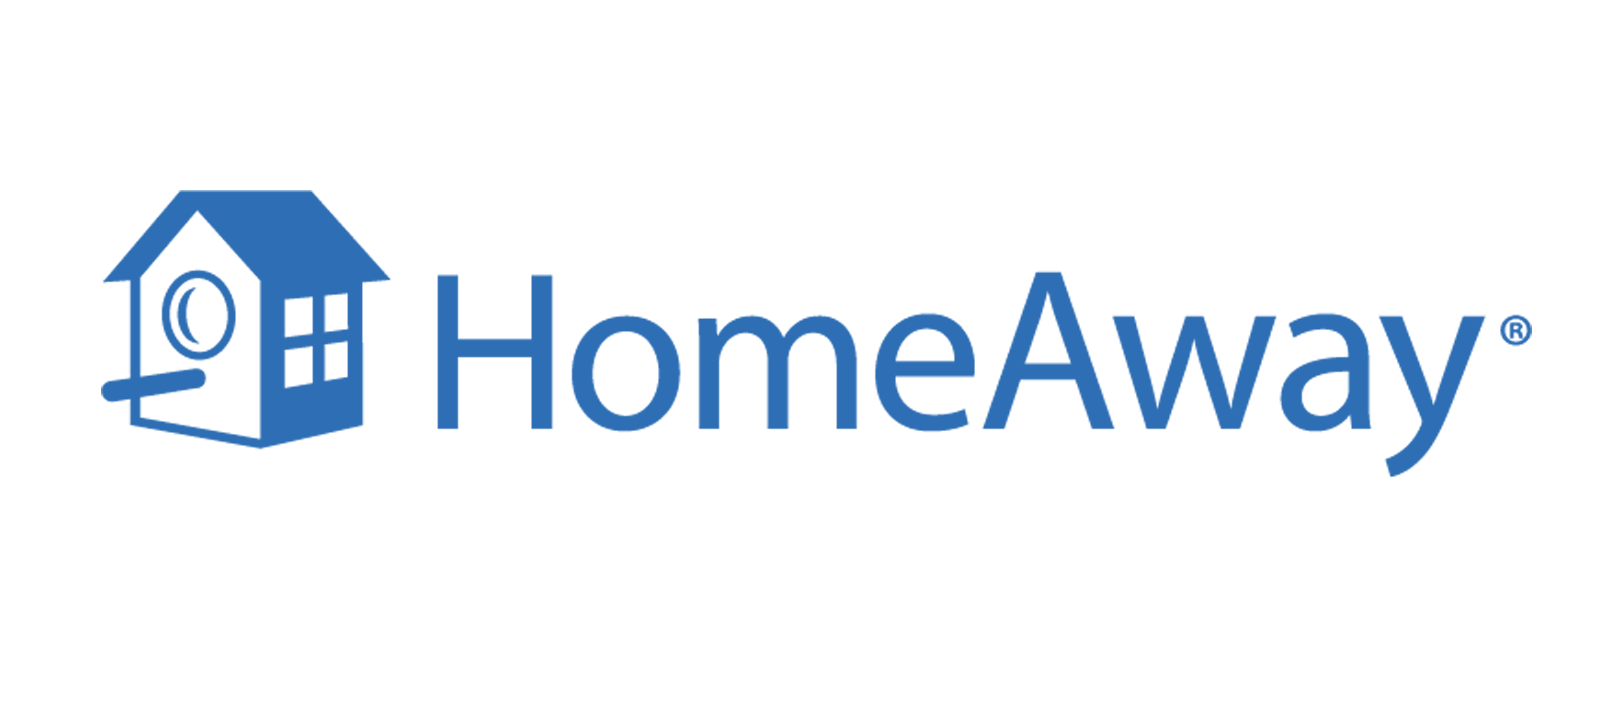 homeaway-logo